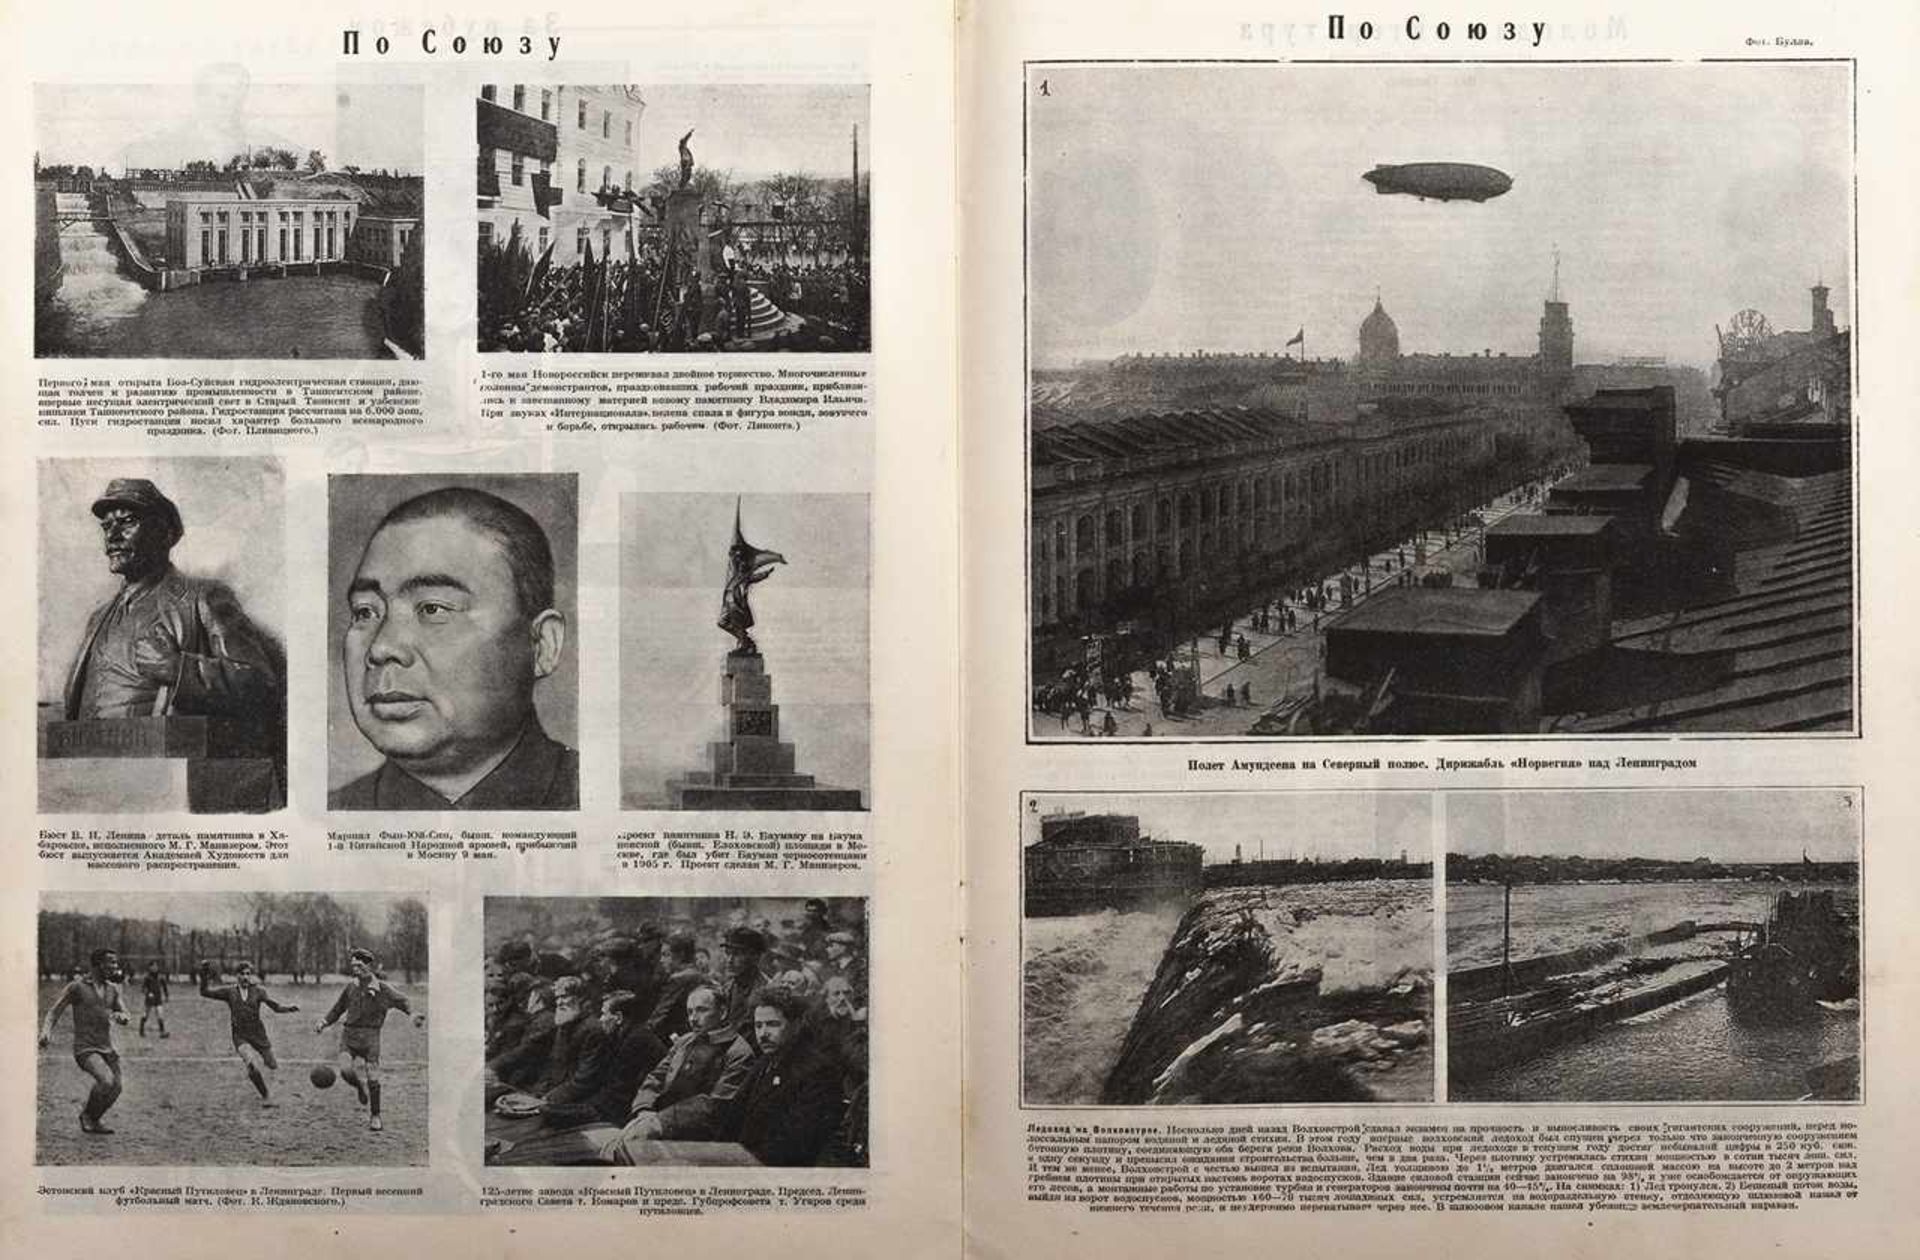 [Soviet art]. Krasnaya Niva: [Magazine]. Issues 31. Moscow, 1926. - Image 2 of 2